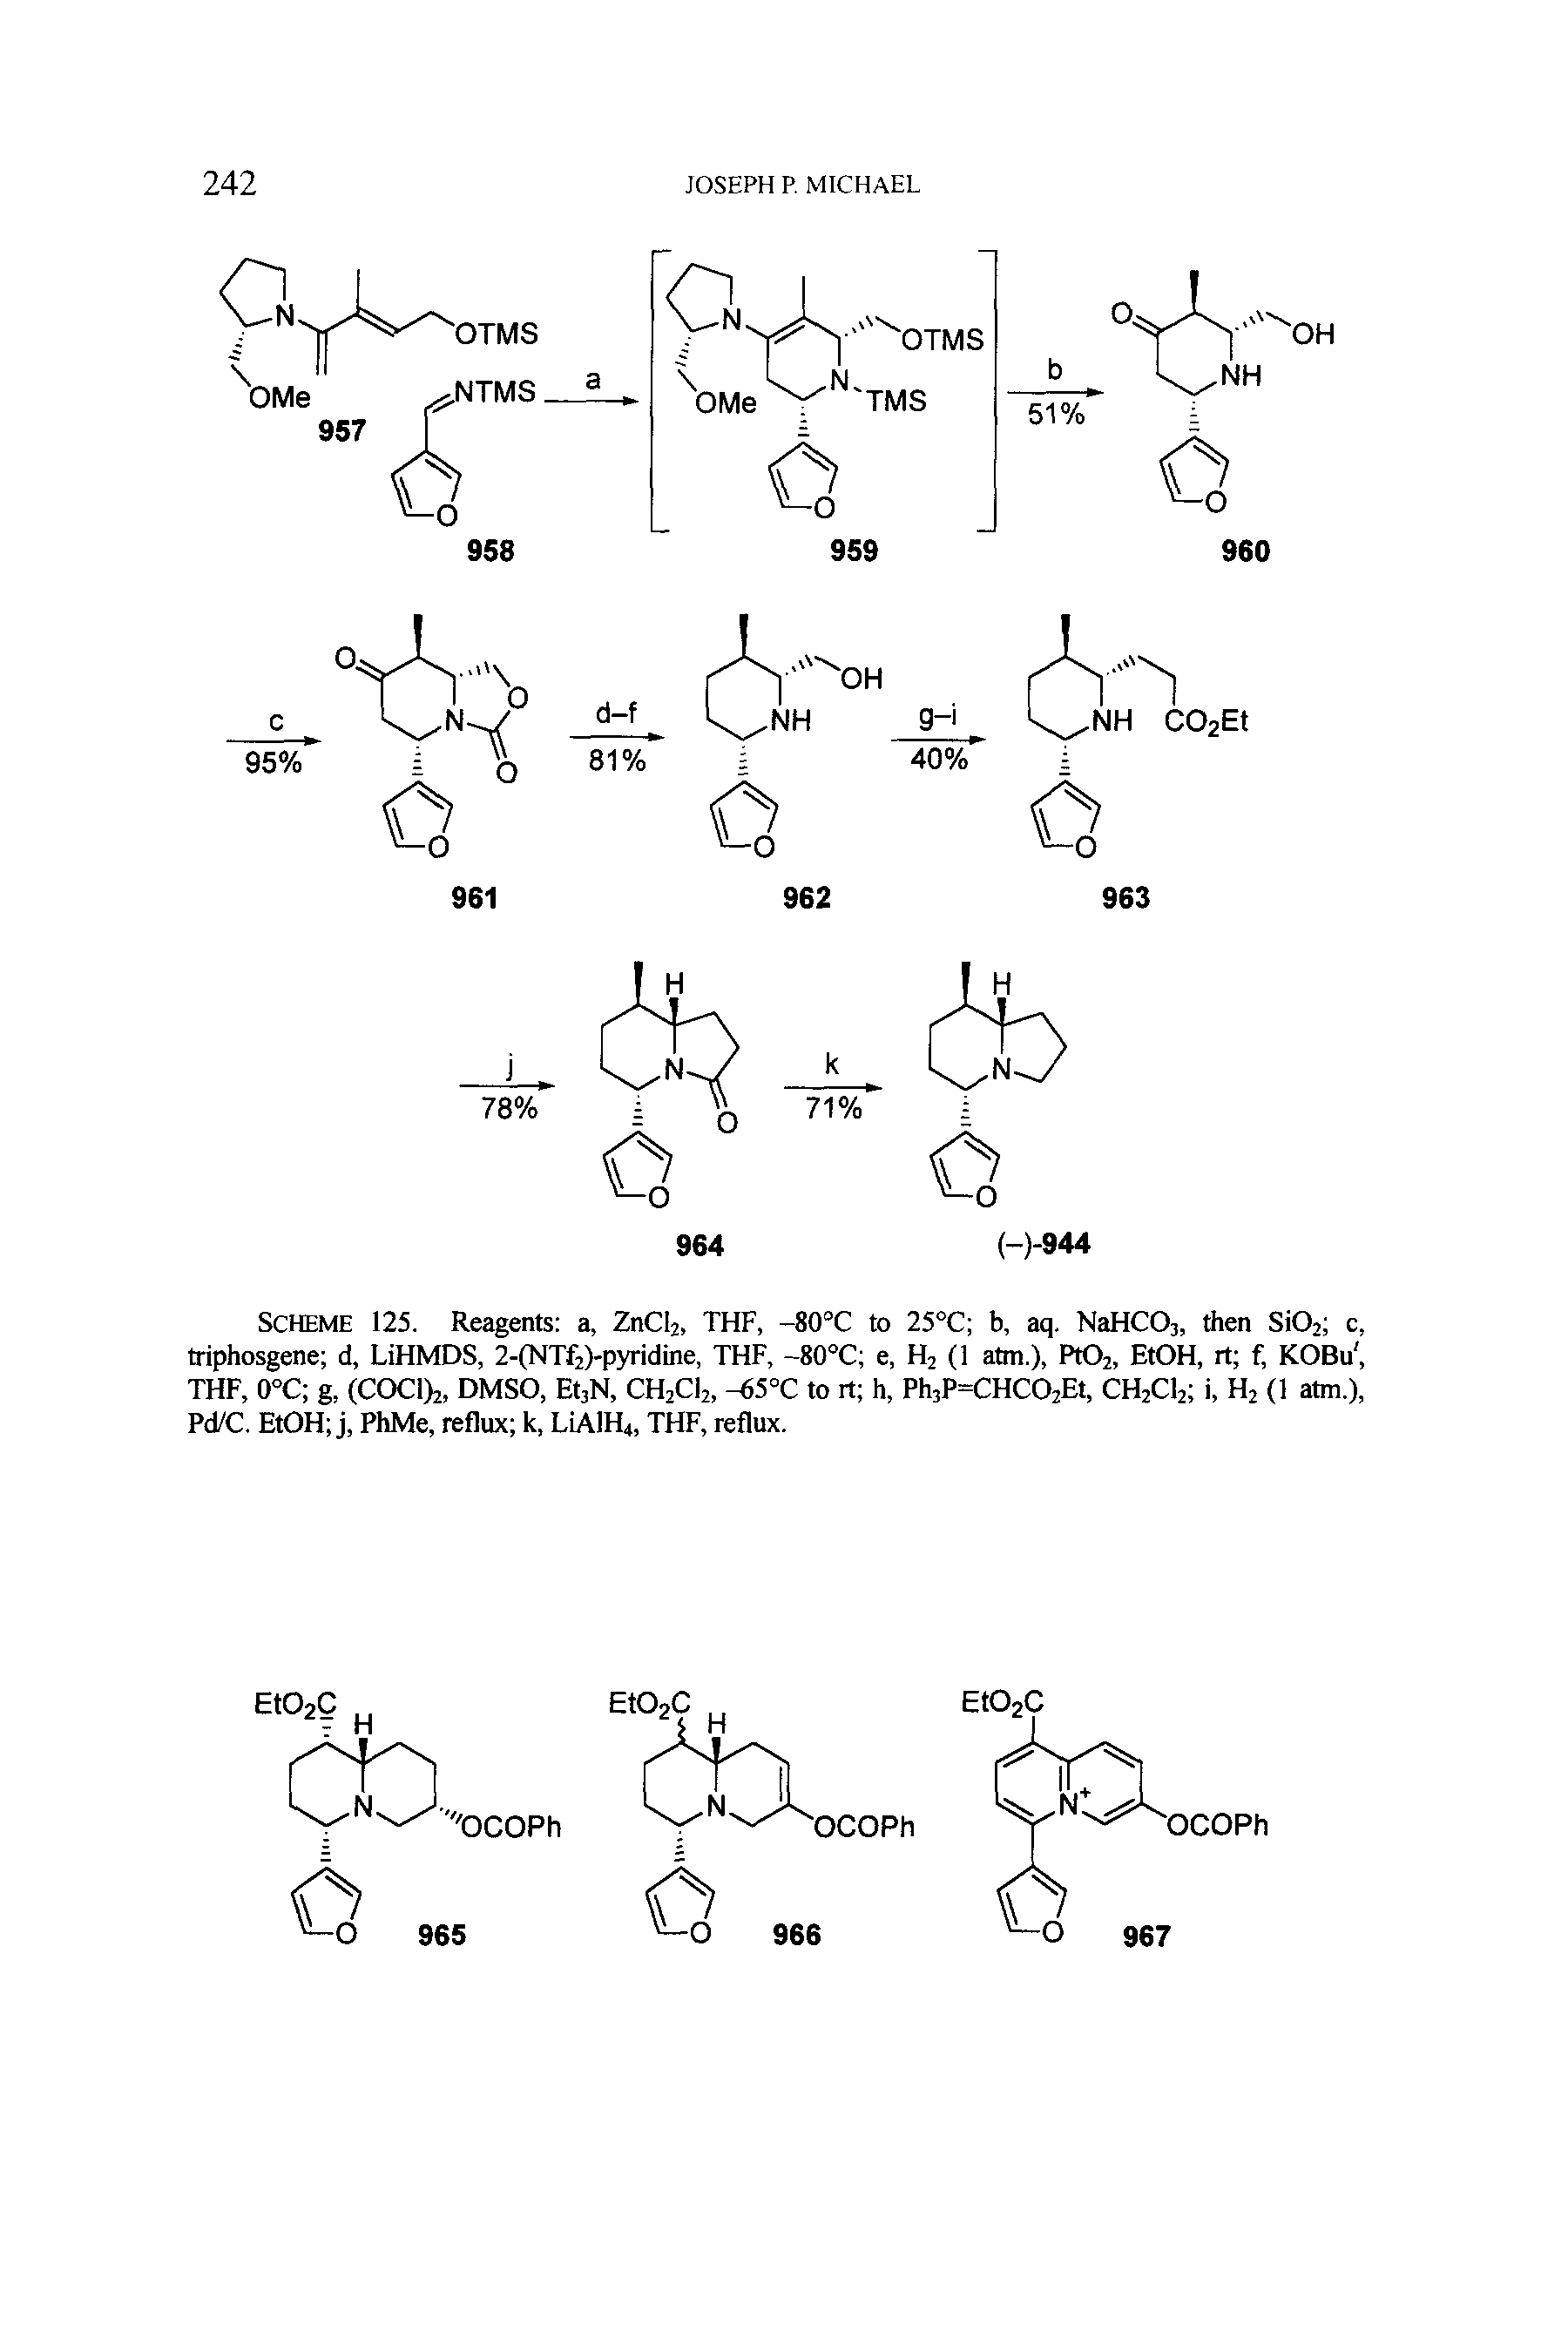 Scheme 125. Reagents a, ZnCli, THF, -80°C to 25°C b, aq. NaHCOs, then Si02 c, triphosgene d, LiHMDS, 2-(NTf2)-pyridine, THF, -80°C e, H2 (1 atm.), PtOi, EtOH, rt f, KOBu, THF, 0°C g, (COCl)2, DMSO, EtjN, CH2CI2, -65 C to rt h, Ph3P=CHC02Et, CH2CI2 i, H2 (1 atm.), Pd/C. EtOH j, PhMe, reflux k, LiAlH4, THF, reflux.